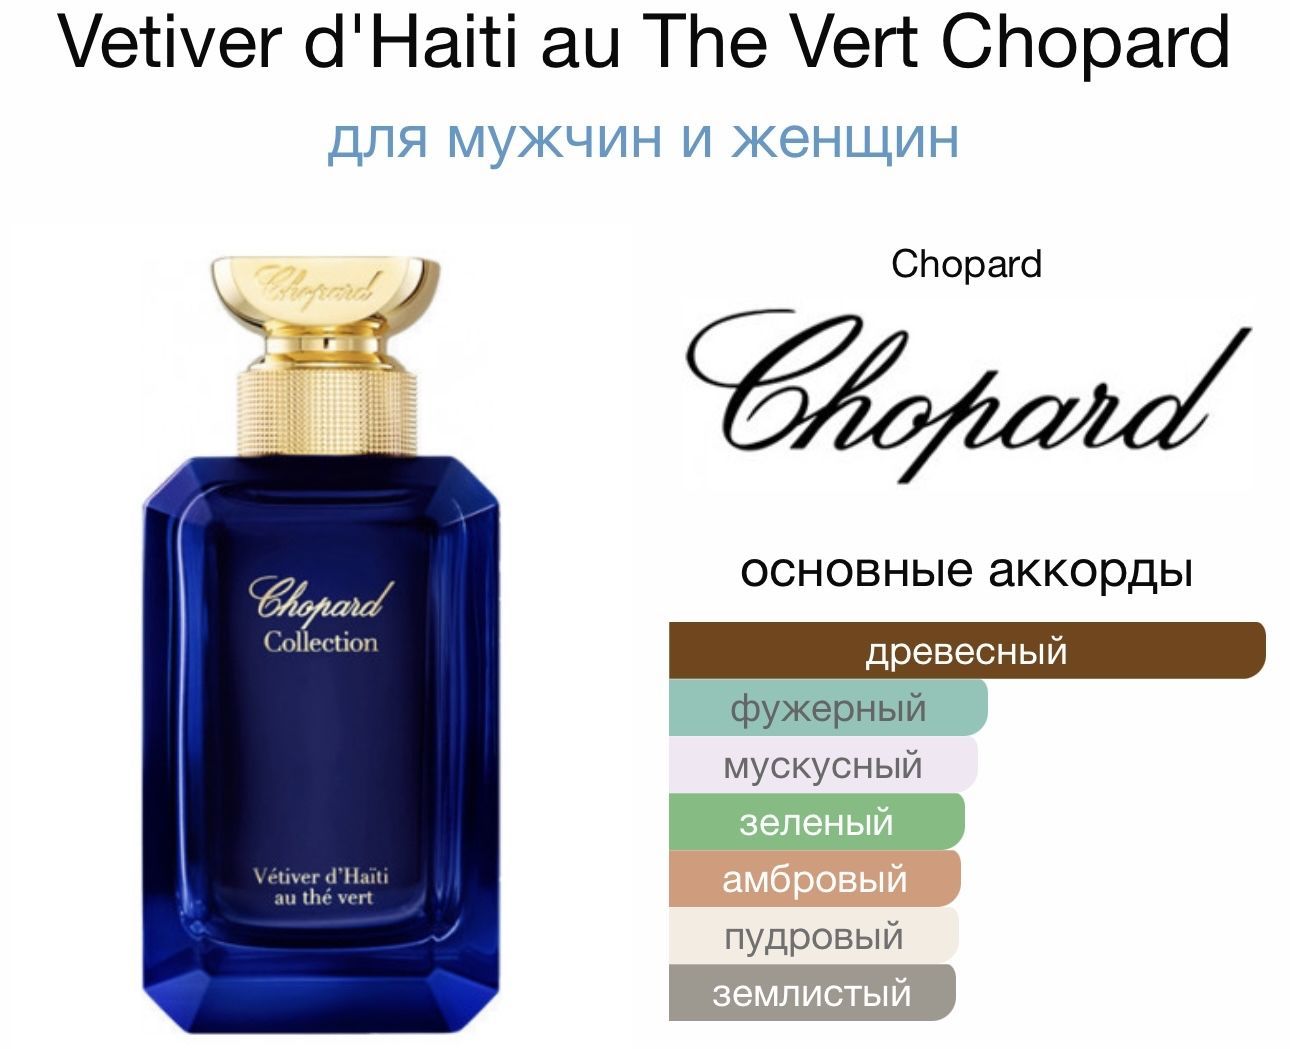 Chopard vetiver d haiti отзывы. Chopard Vetiver d'Haiti au the Vert. Chopard collection Vetiver d Haiti au the Vert. Chopard Vetiver d Haiti au the Vert - фото.